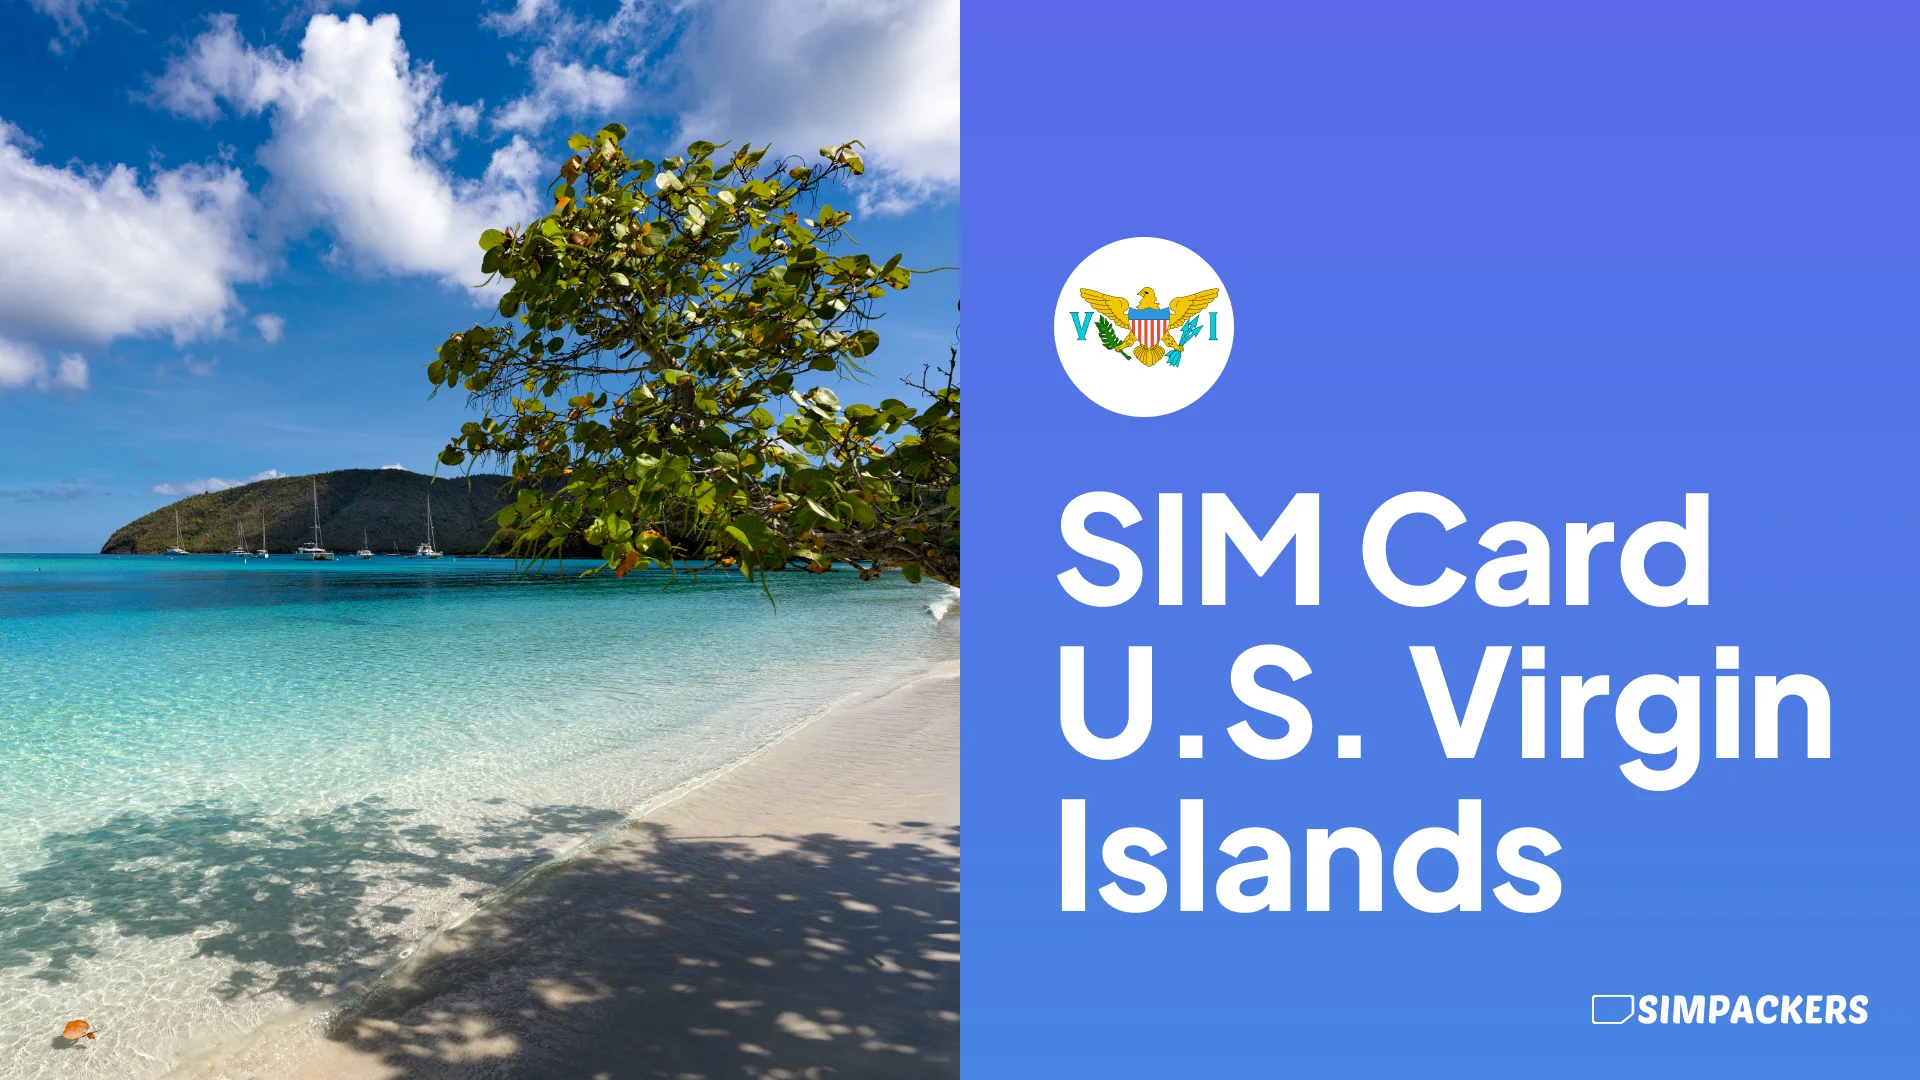 EN/FEATURED_IMAGES/sim-card-united-states-virgin-islands.webp